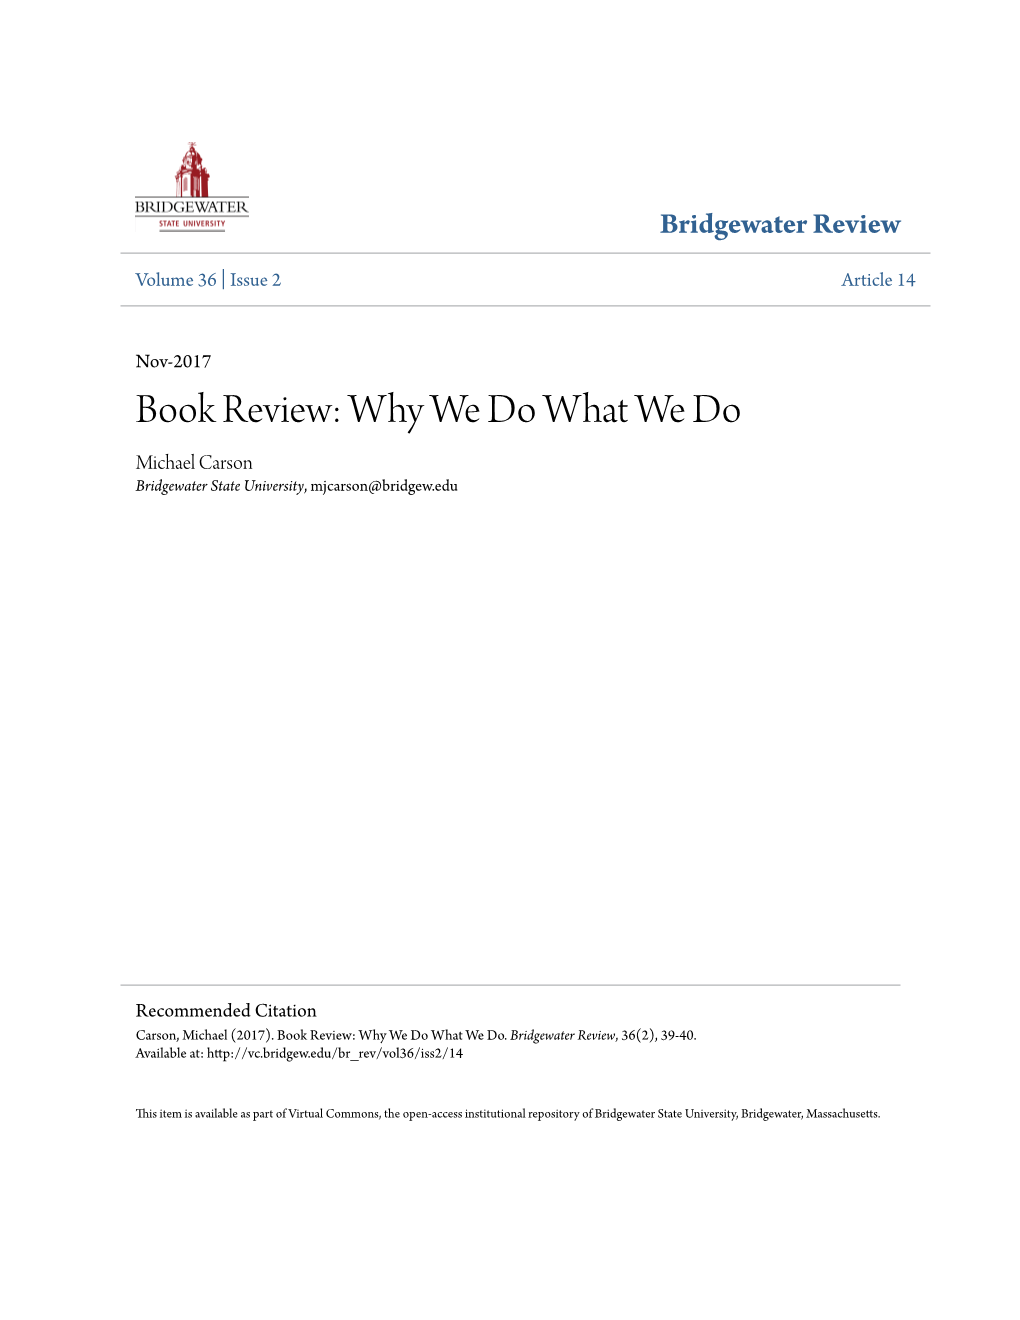 Book Review: Why We Do What We Do Michael Carson Bridgewater State University, Mjcarson@Bridgew.Edu